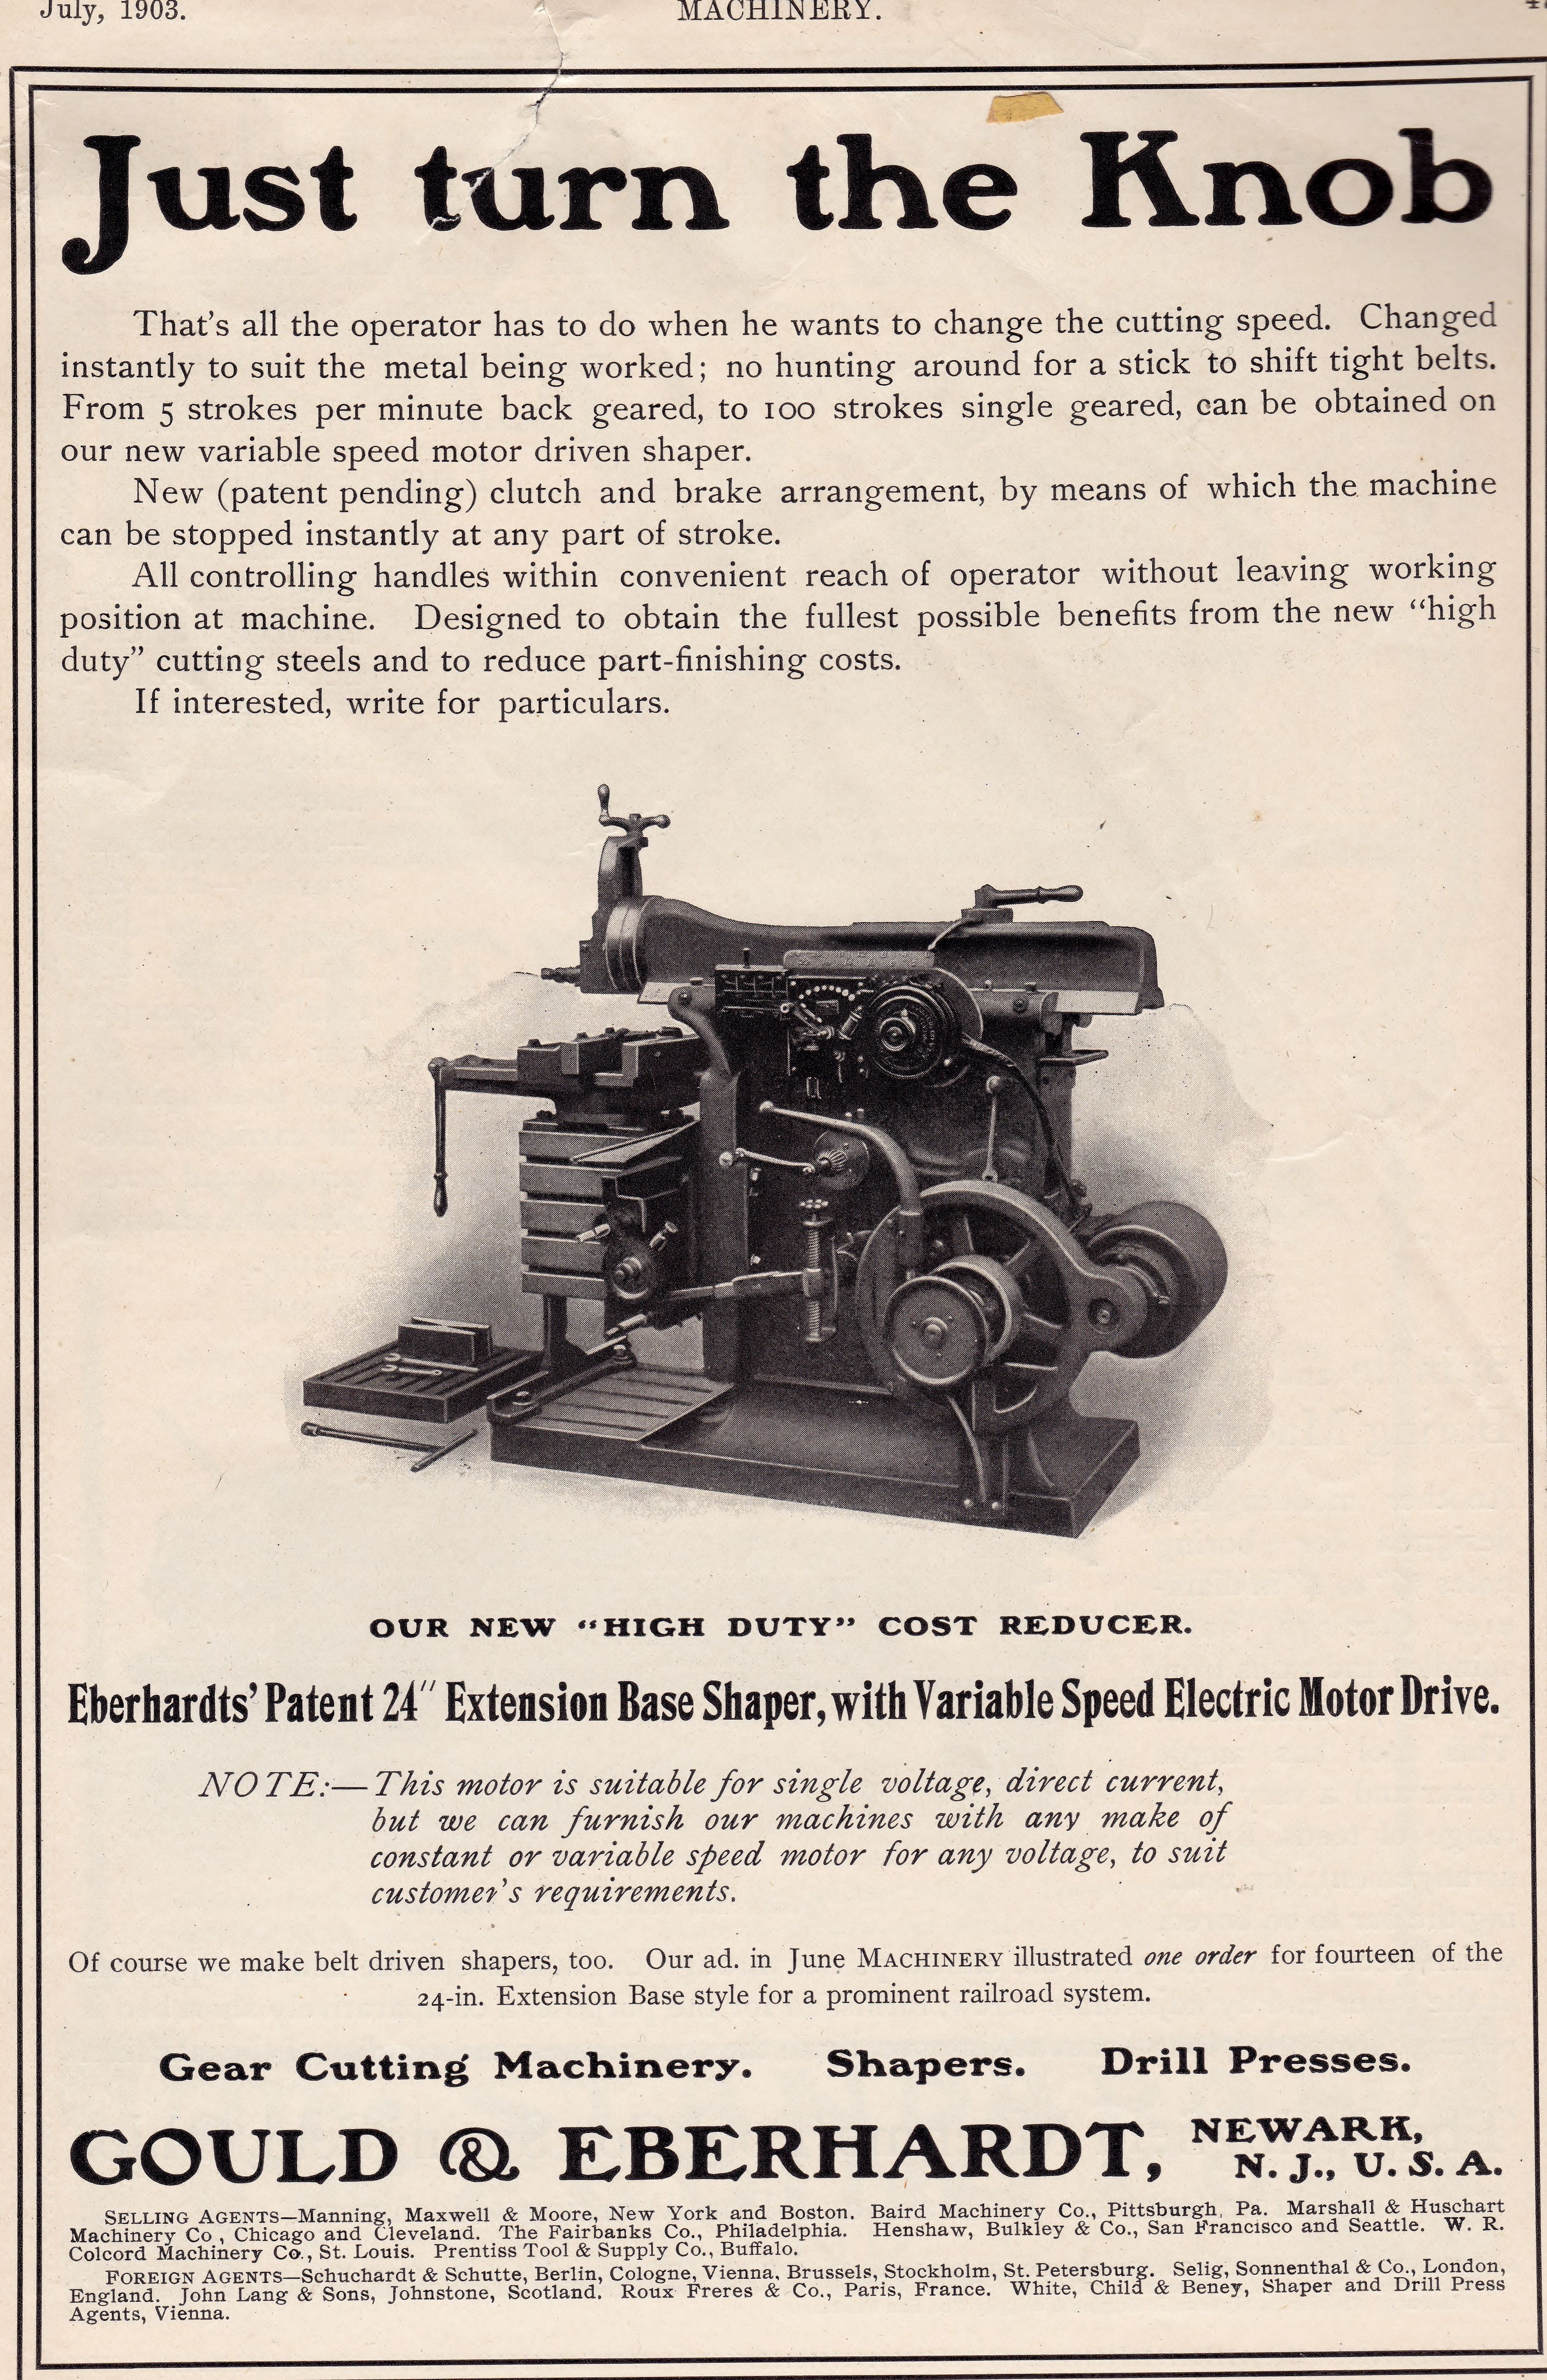 this should be a shaper http://antiquemachinery.com/00-machinery-magazine-July-1903-shaper-metal-gould-eberhardt4meg.jpg